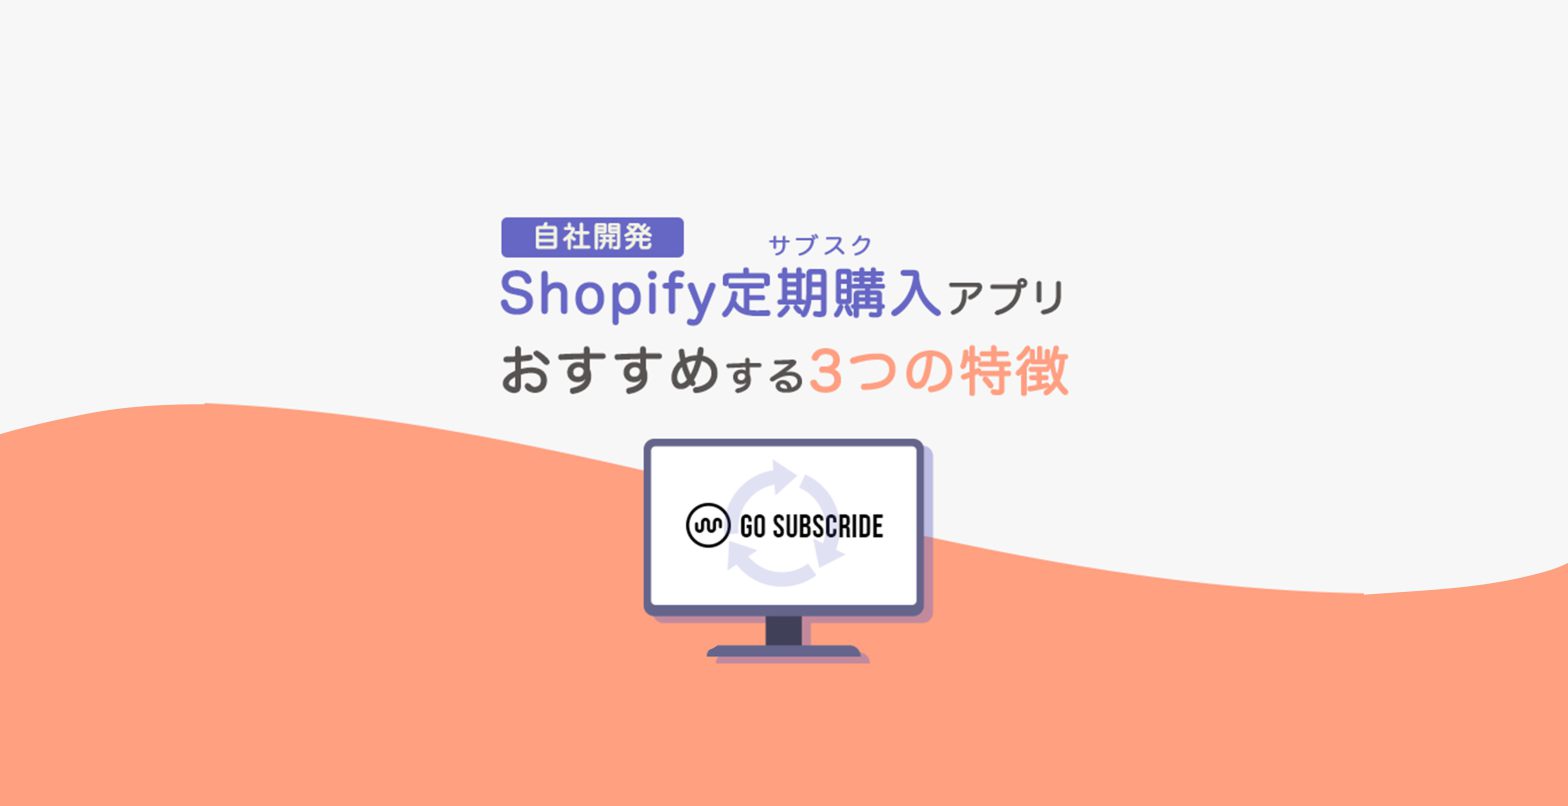 Shopify Plus パートナーが勧める定期購買アプリ3つの特徴